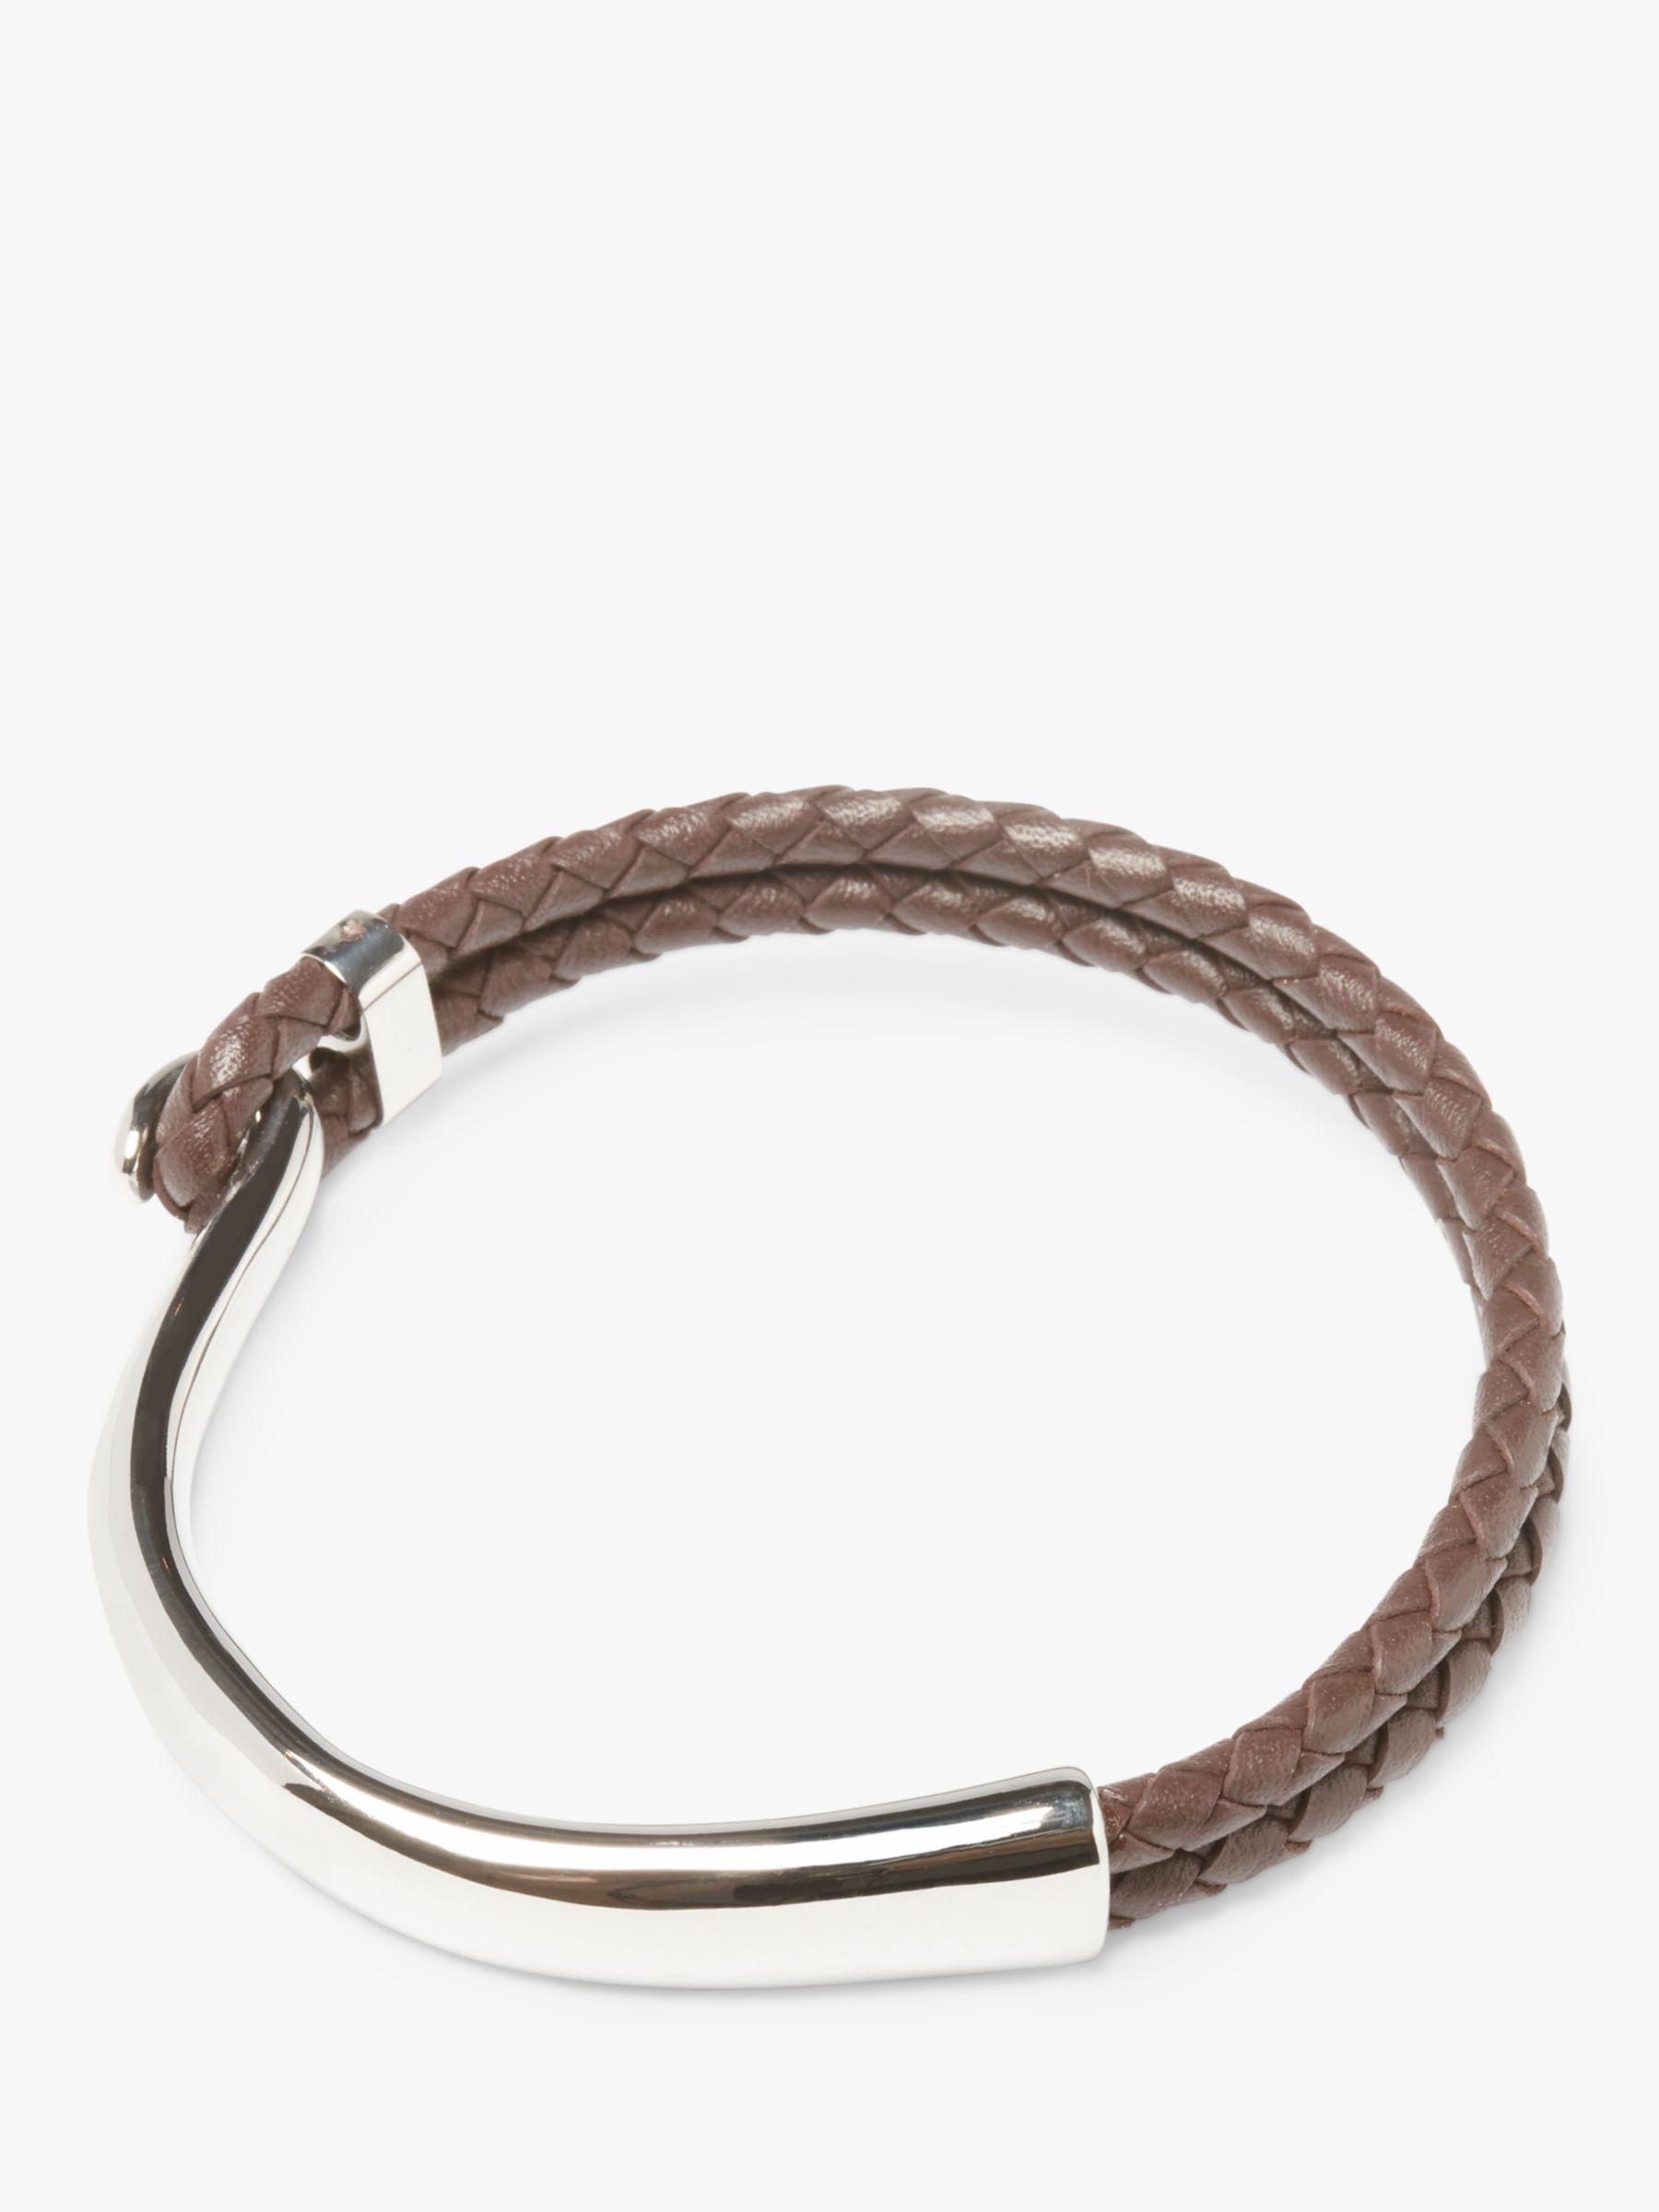 Simon Carter Lizard Leather Stainless Steel Bracelet, Brown